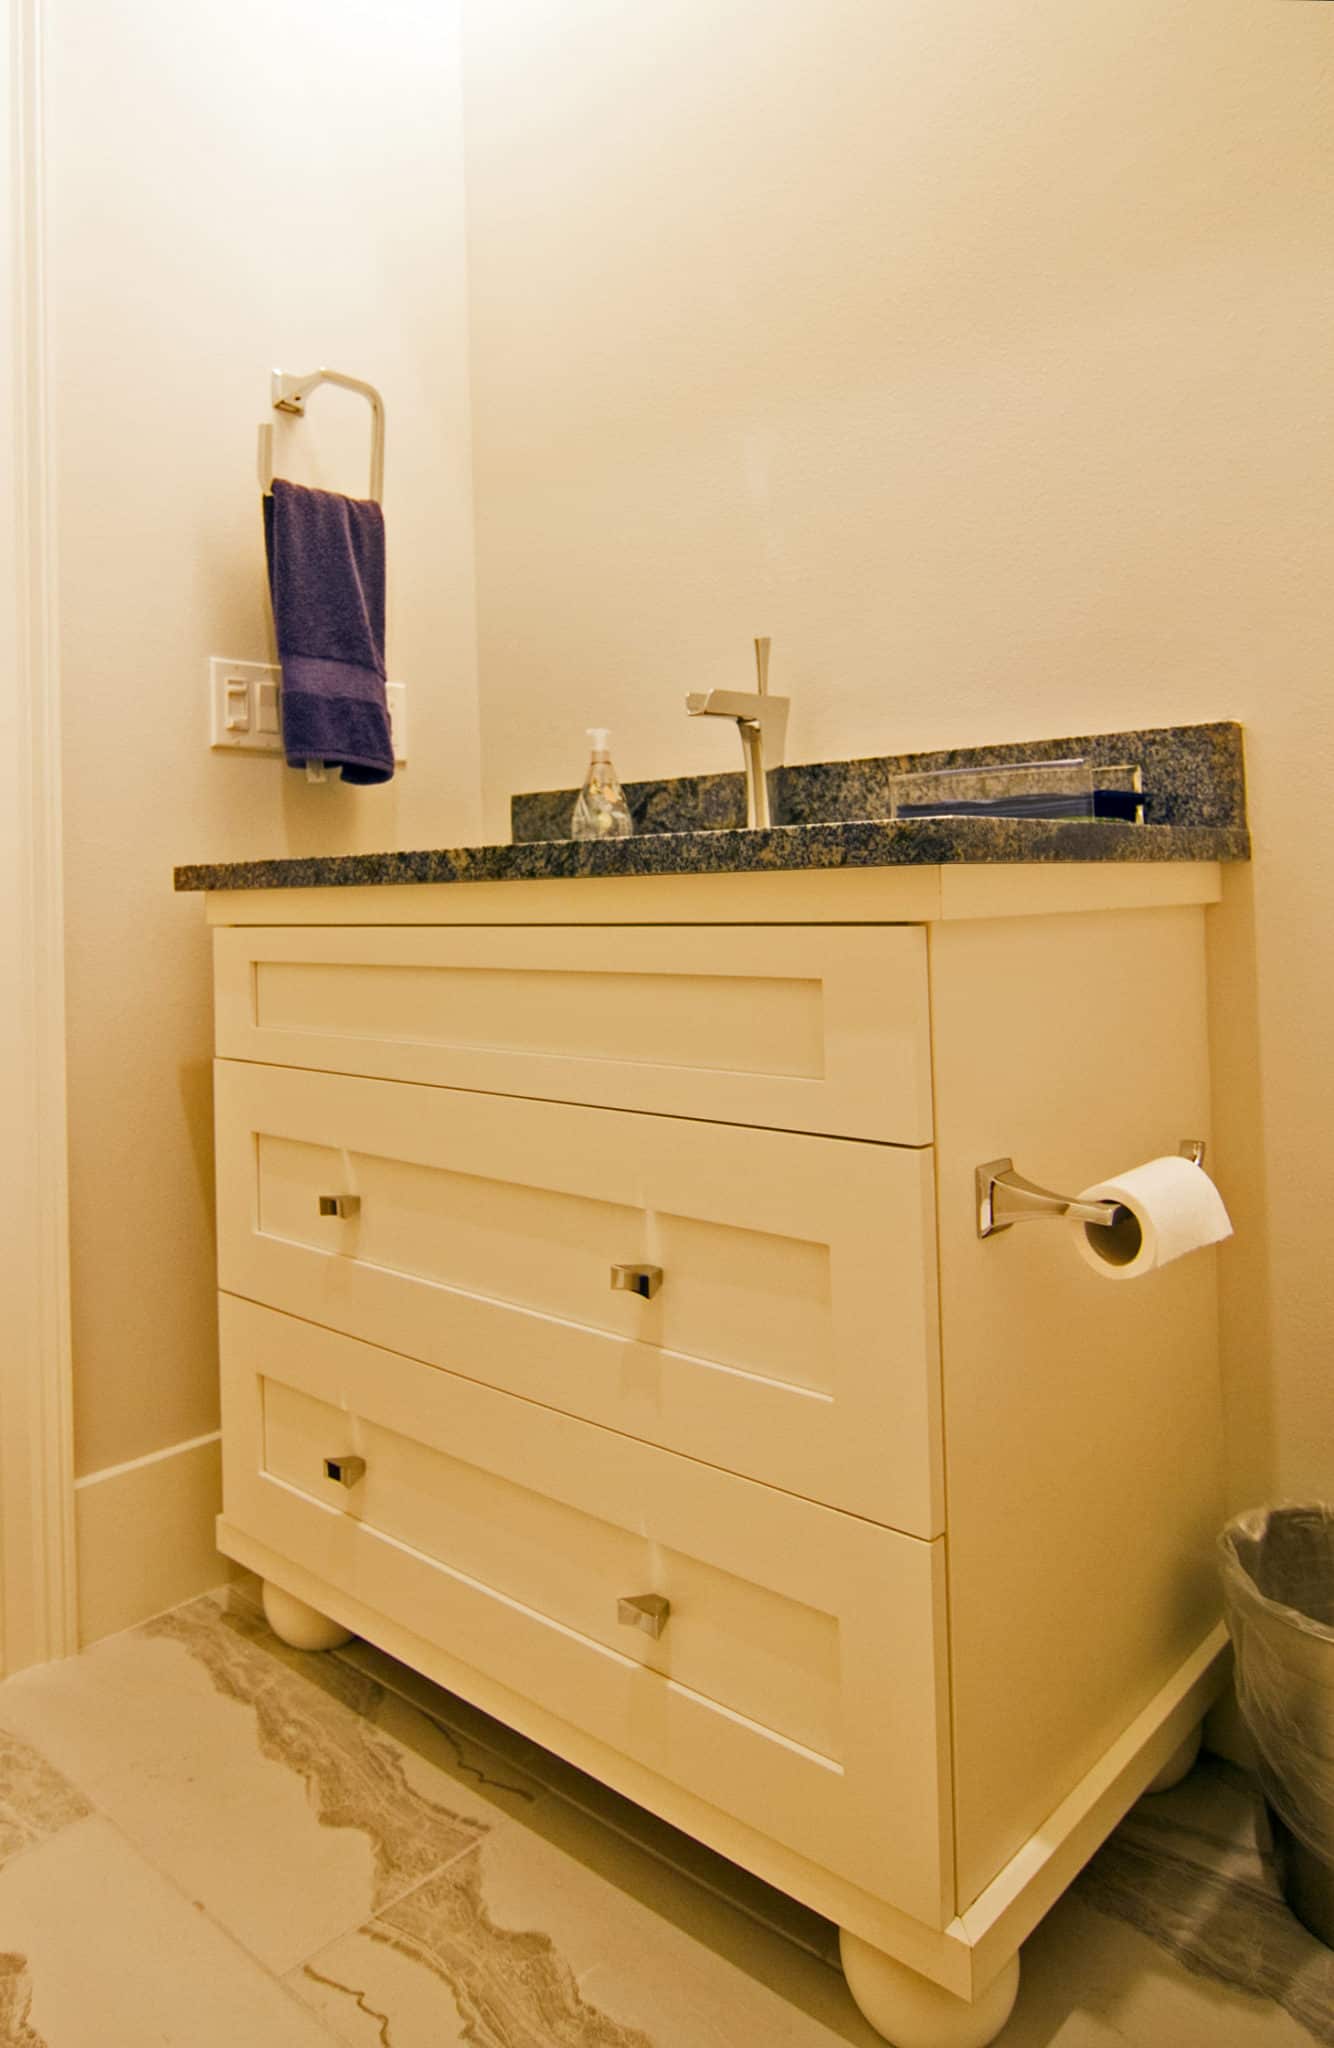 mccabinet bathroom cabinet sink